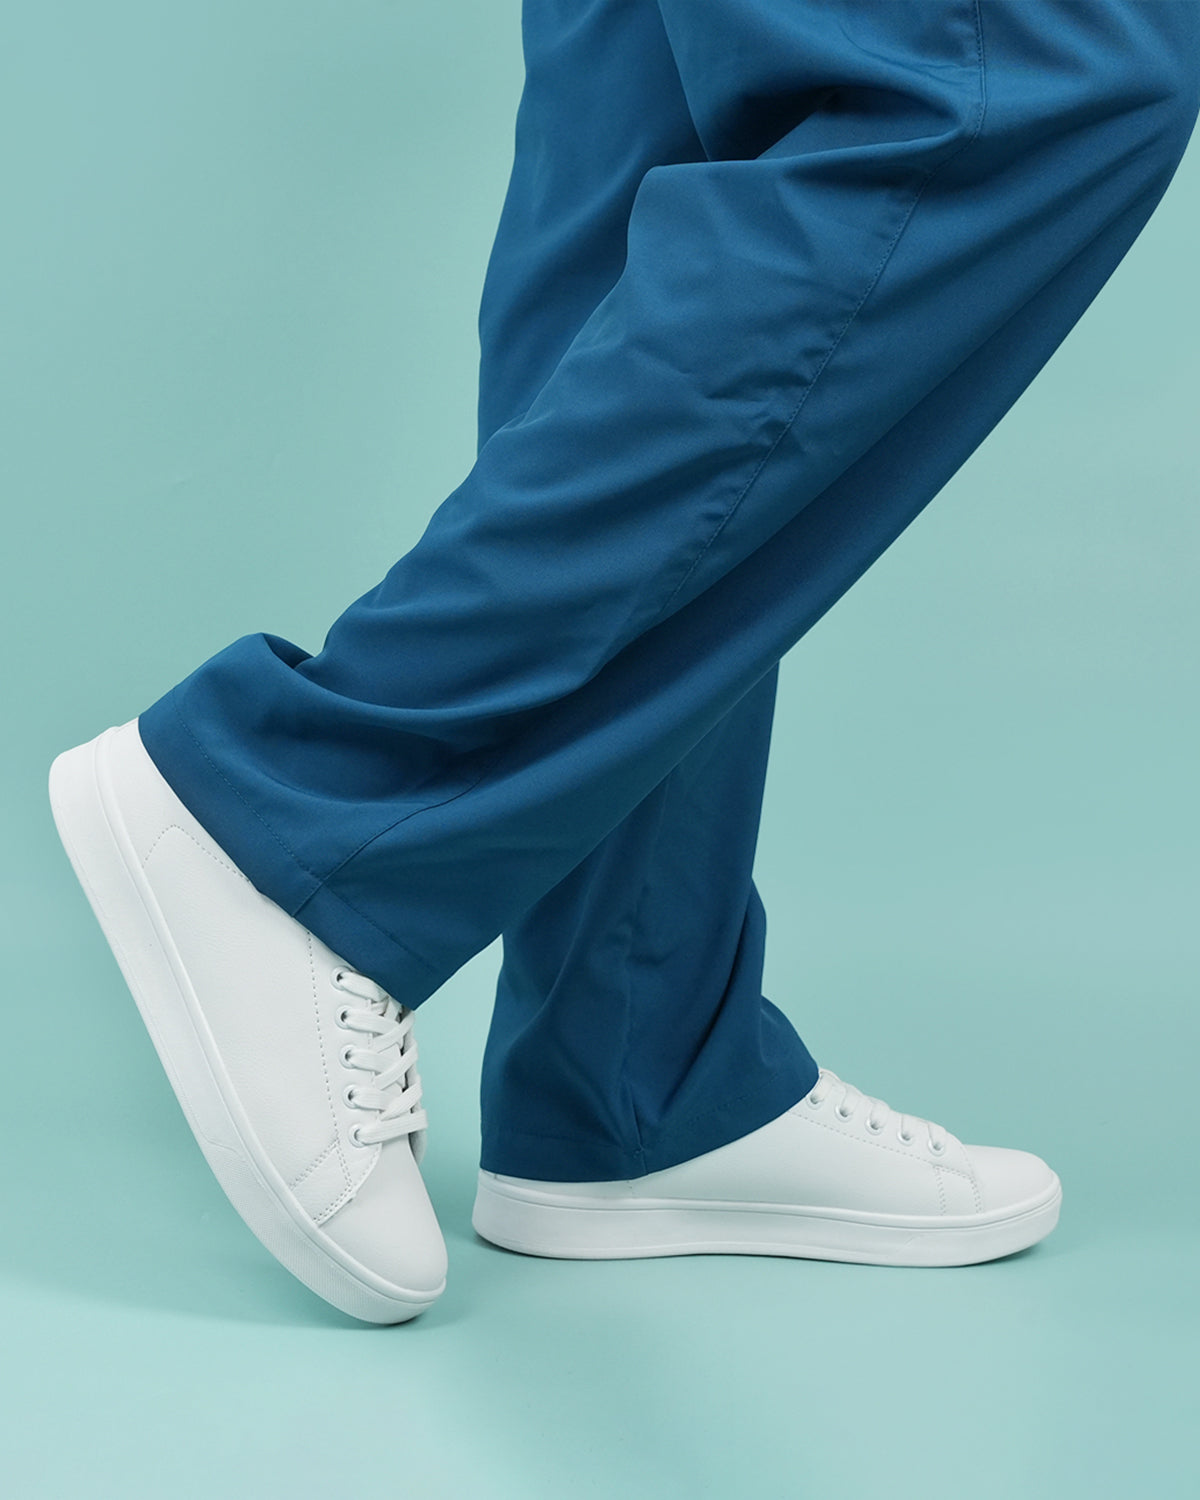 Hawkwell Men's Nurse Shoes - Kreio White